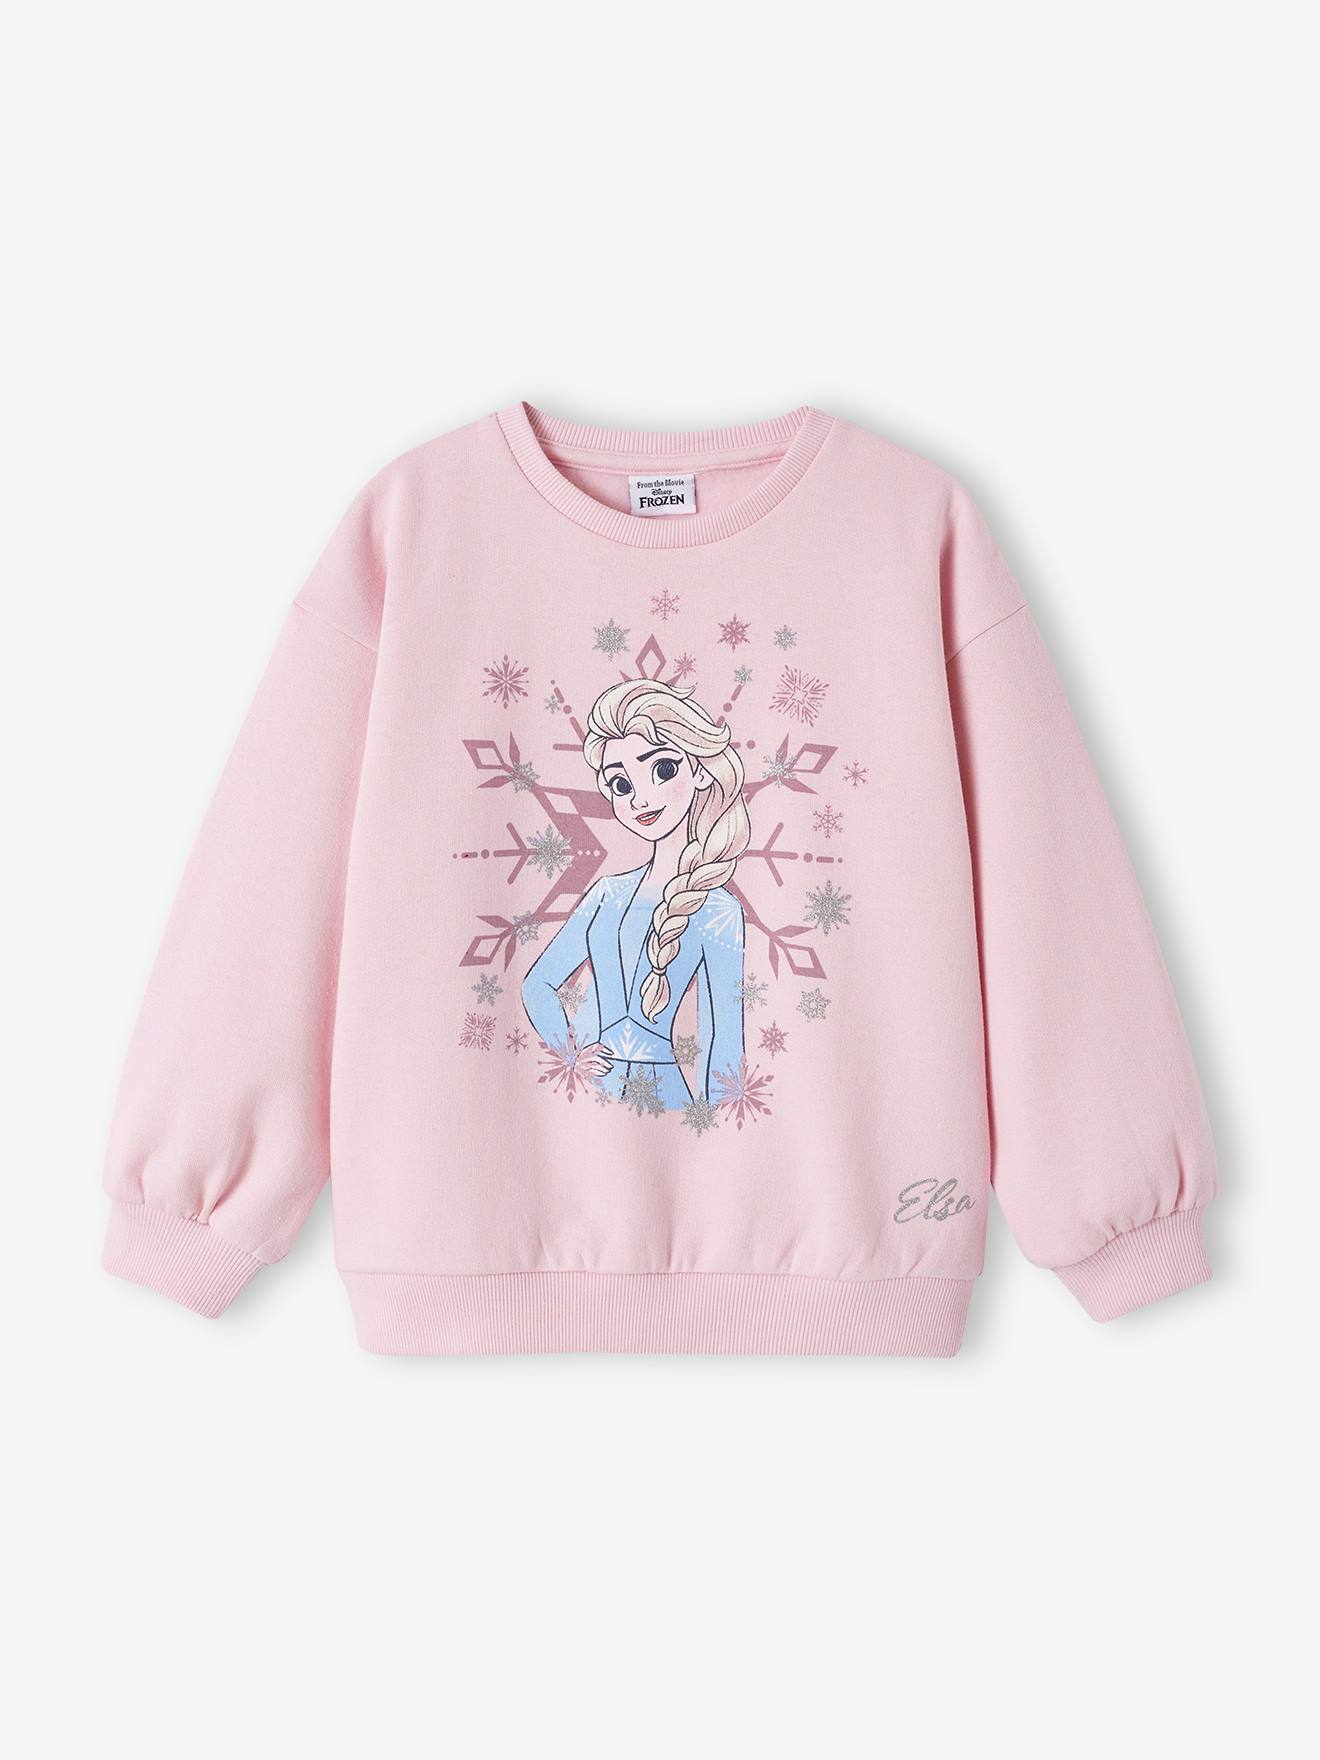 Disney(r) Frozen 2 Sweatshirt for Girls